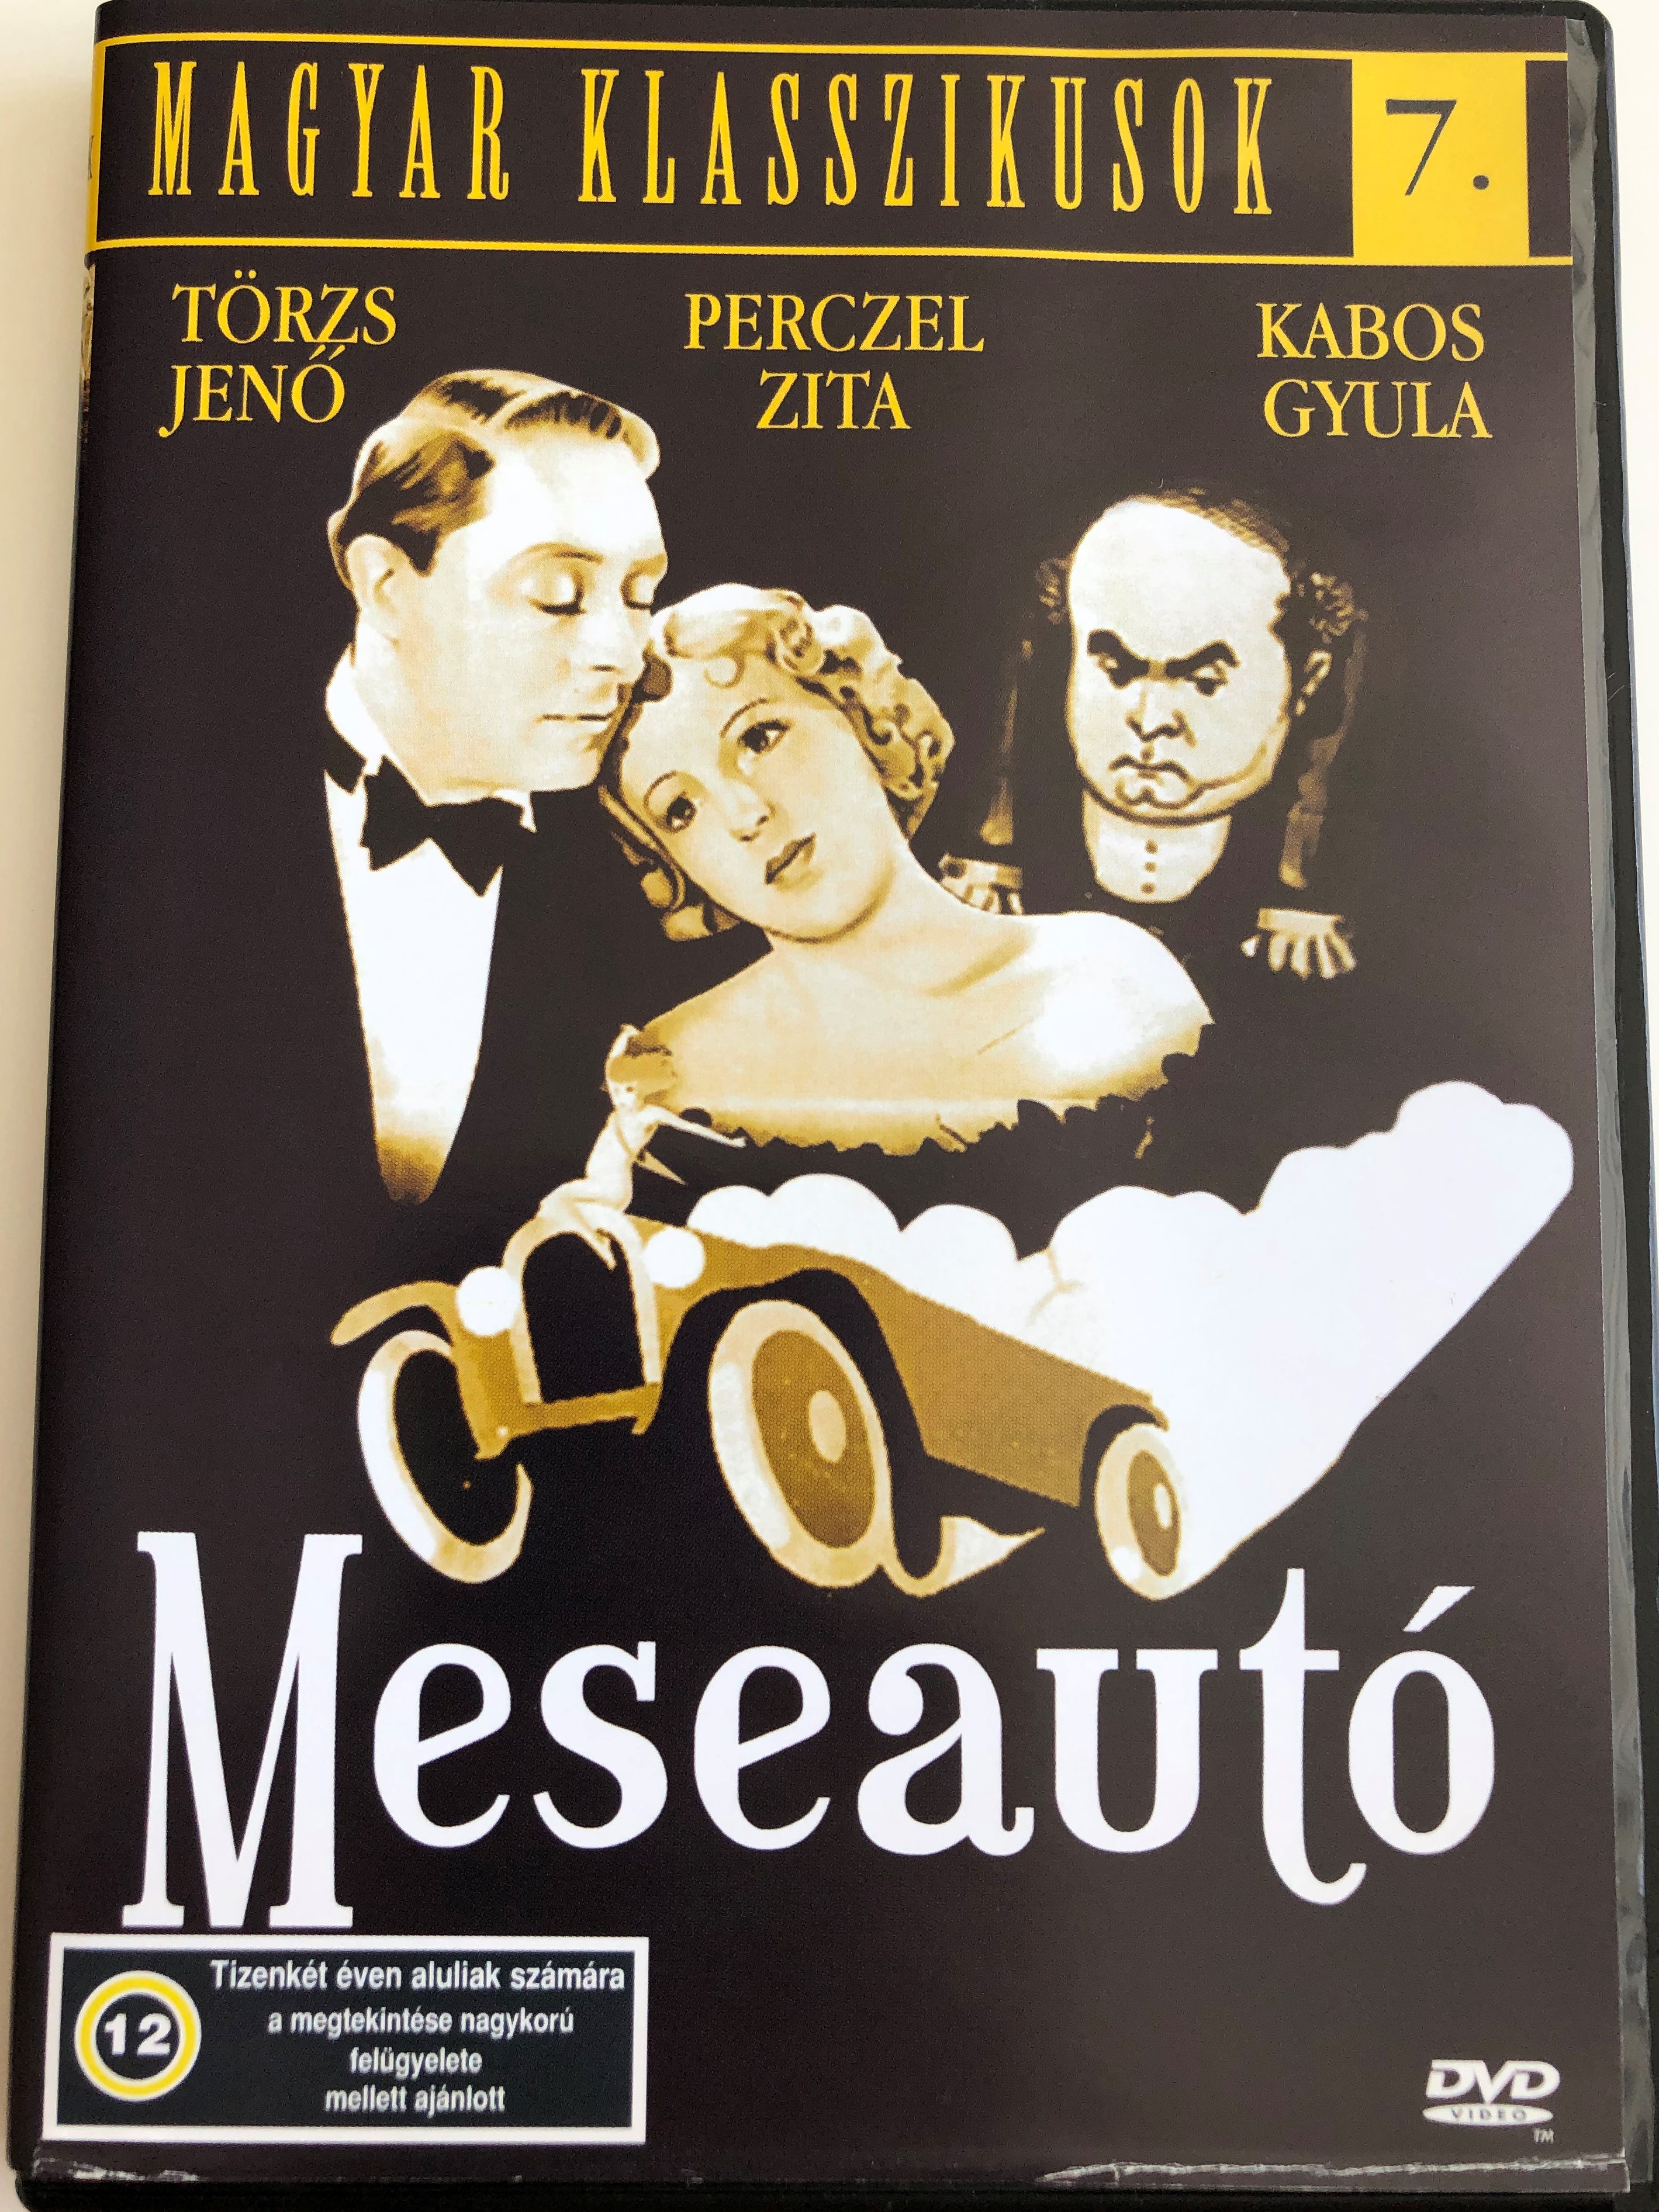 meseaut-dvd-1934-dream-car-directed-by-ga-l-b-la-starring-perczel-zita-kabos-gyula-t-rzs-jen-magyar-klasszikusok-7.-hungarian-black-white-classic-1-.jpg